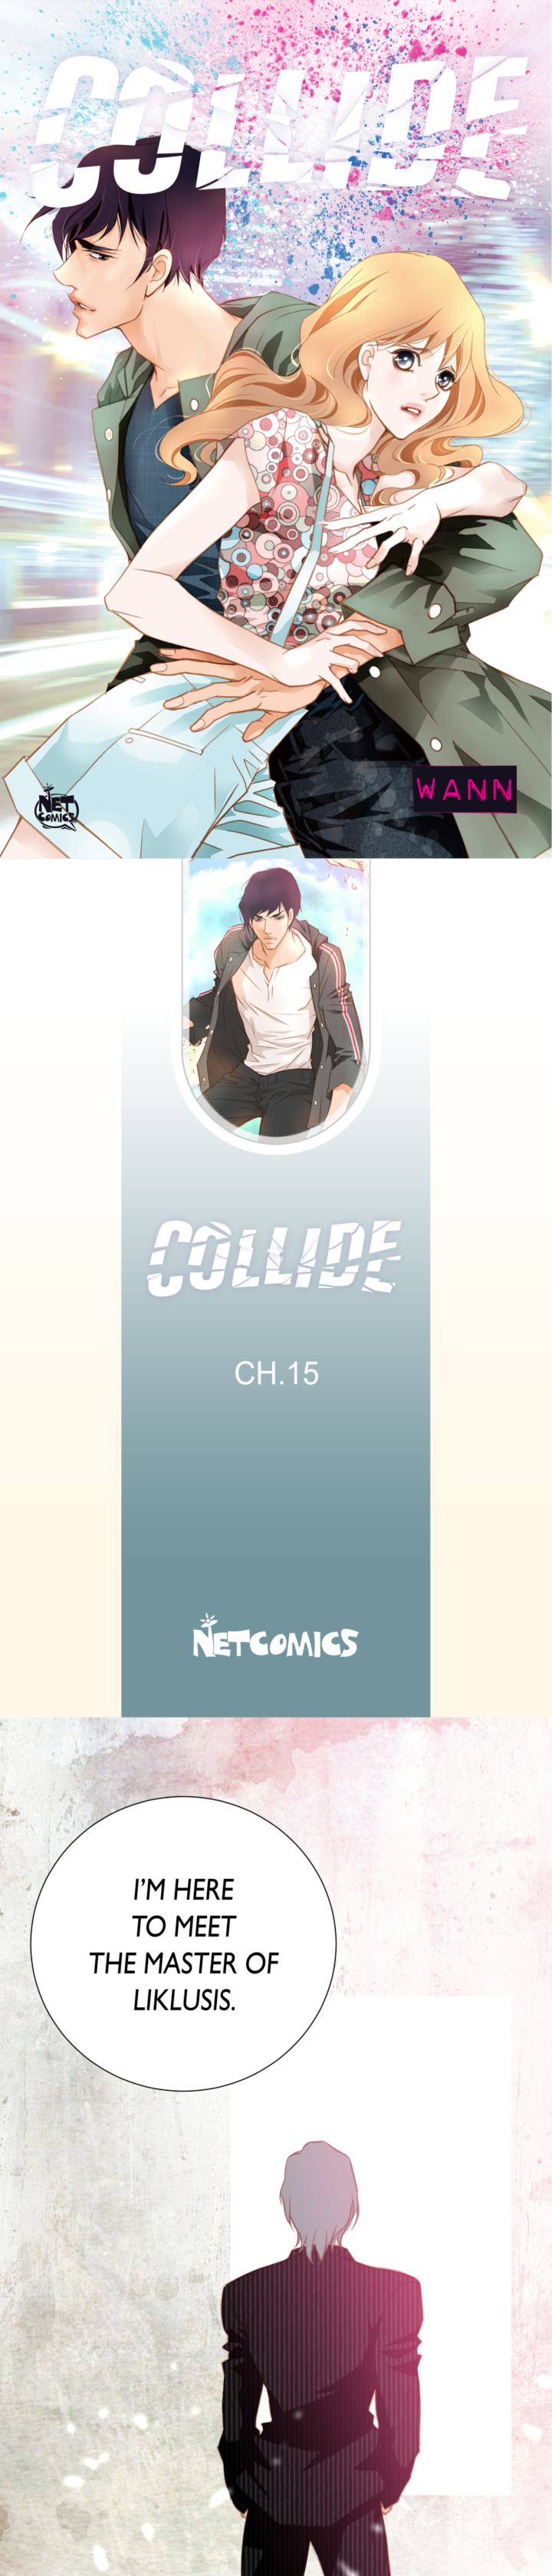 Collide Ch.15